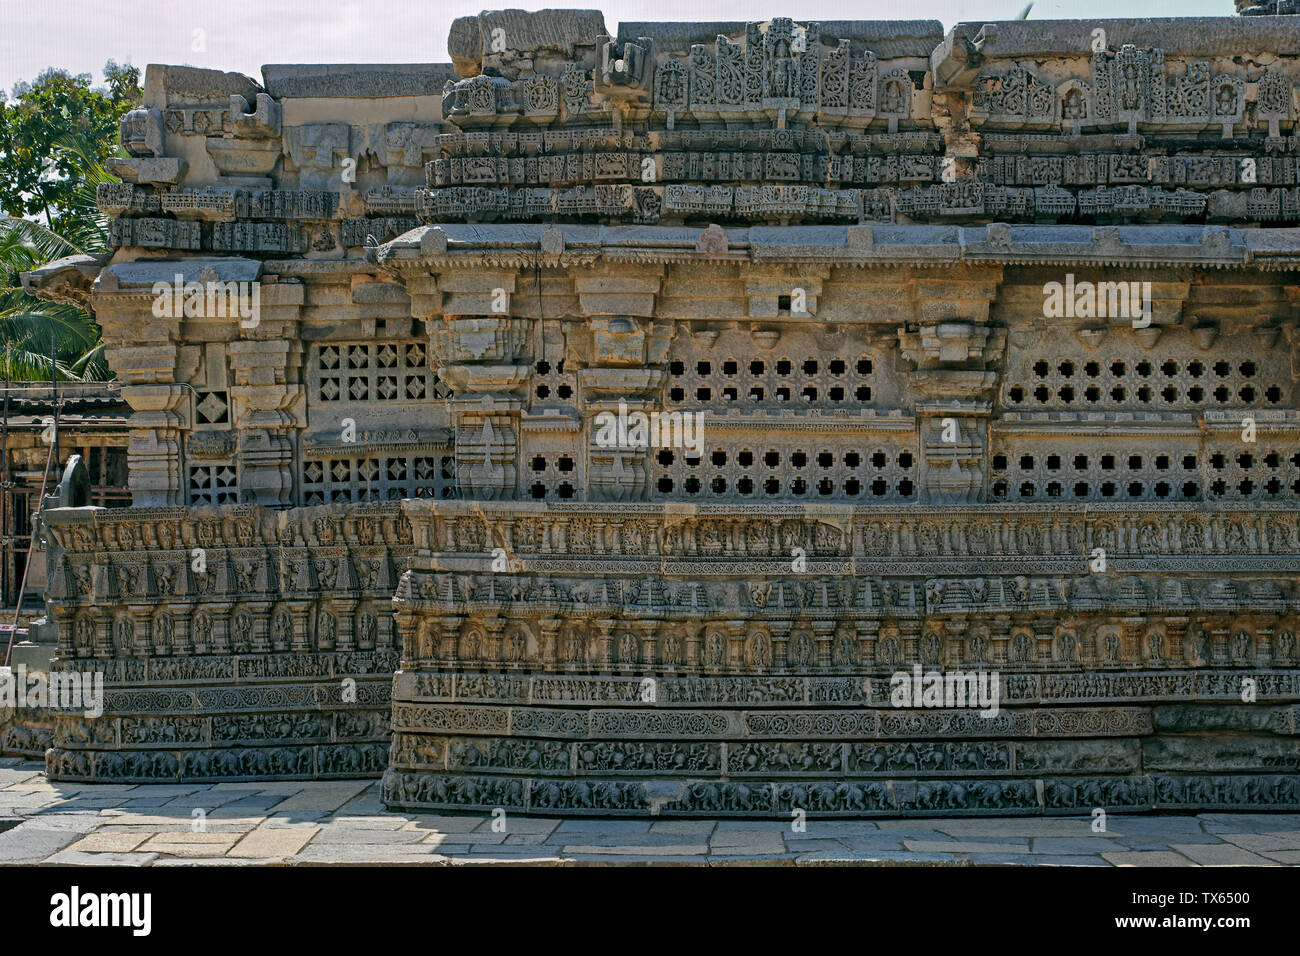 31 Oct 2009 Stone carved-1268 AD Hoysala Architecture-Kesava temple at Somnathpur village 45 km fro Mysore Karnataka INDIA Stock Photo